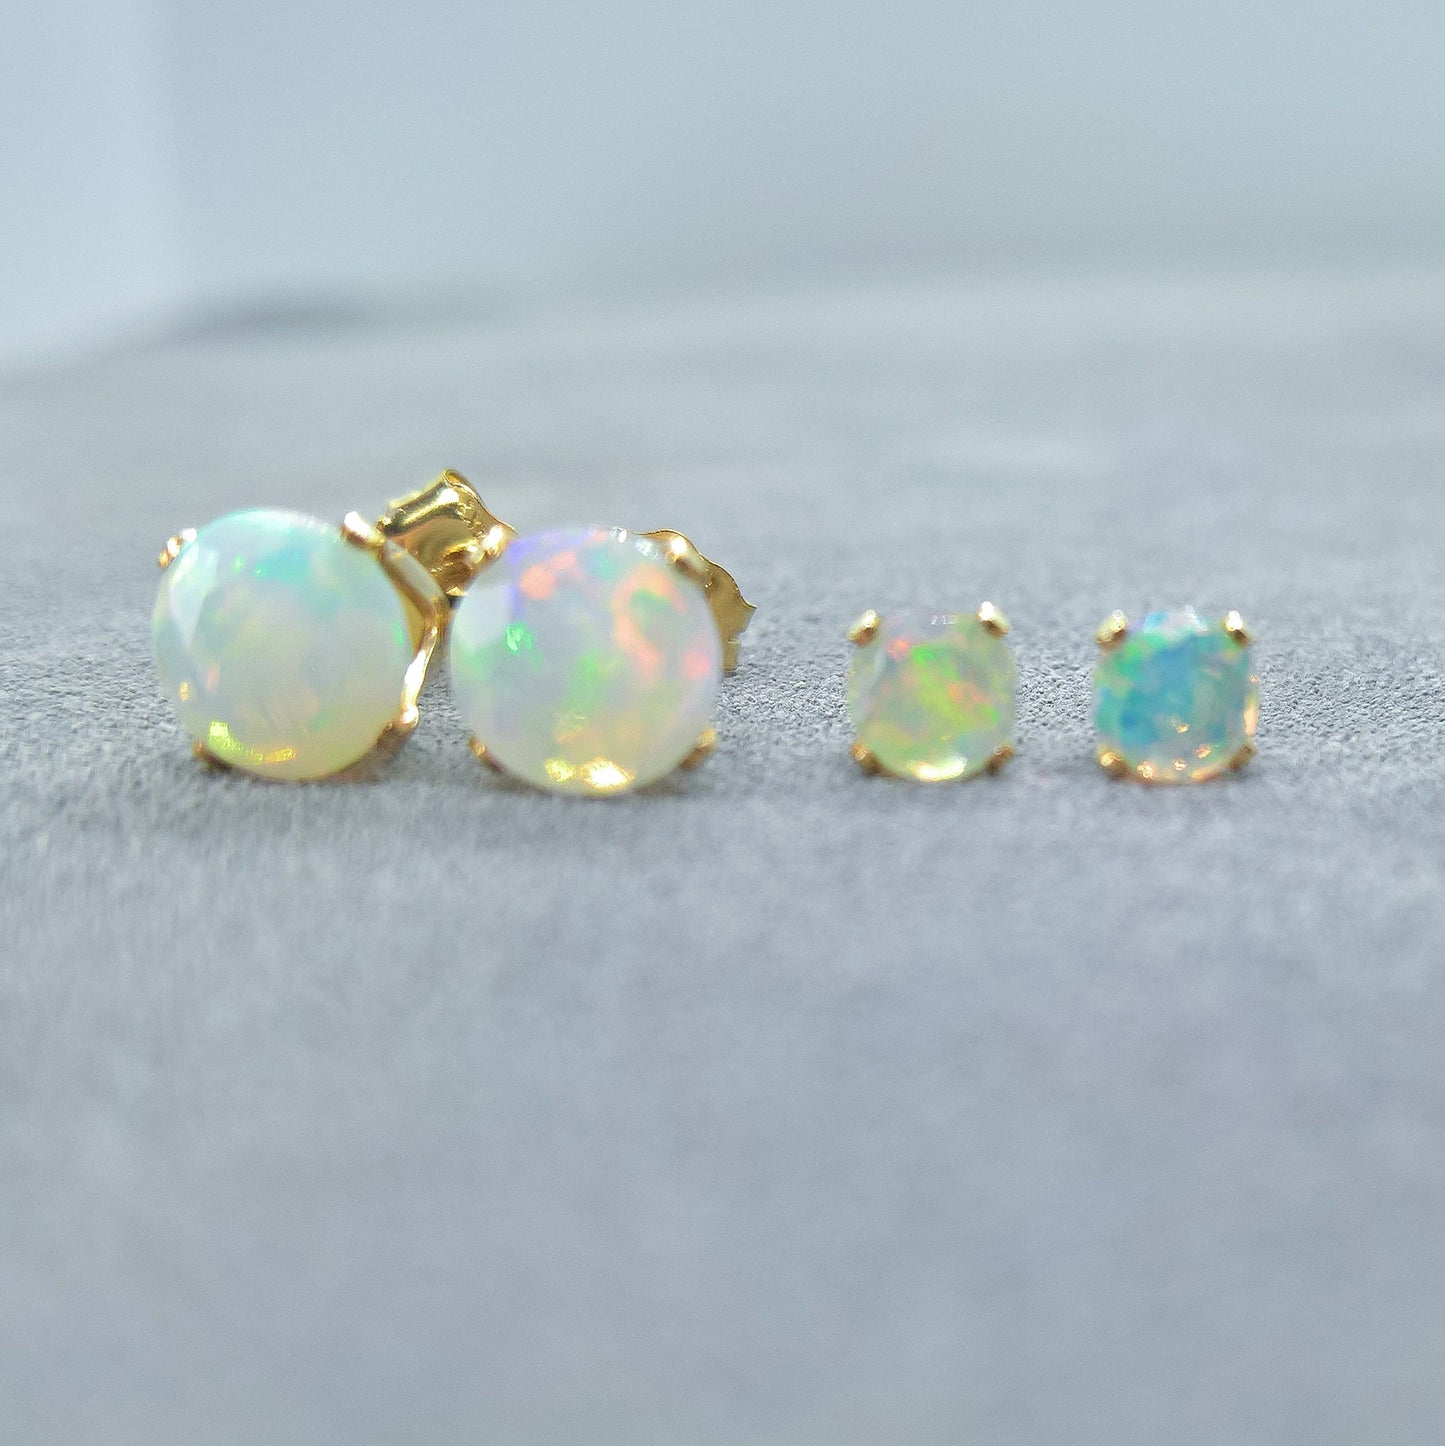 Opal stud earrings in gold filled or sterling silver